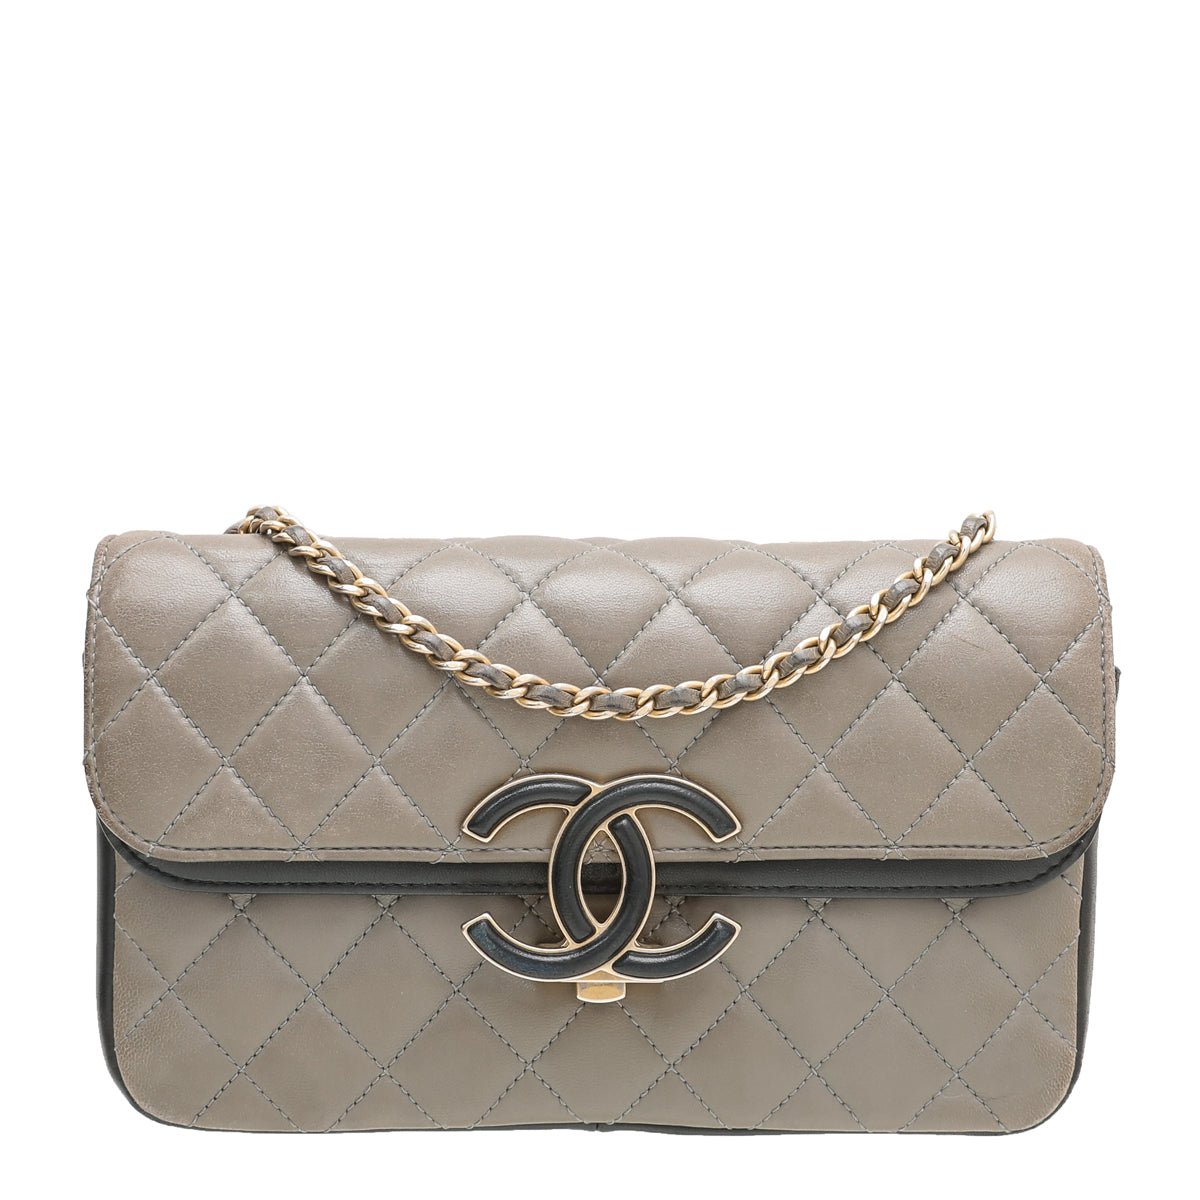 The Closet - Chanel Bicolor CC Enamel Flap Bag | The Closet